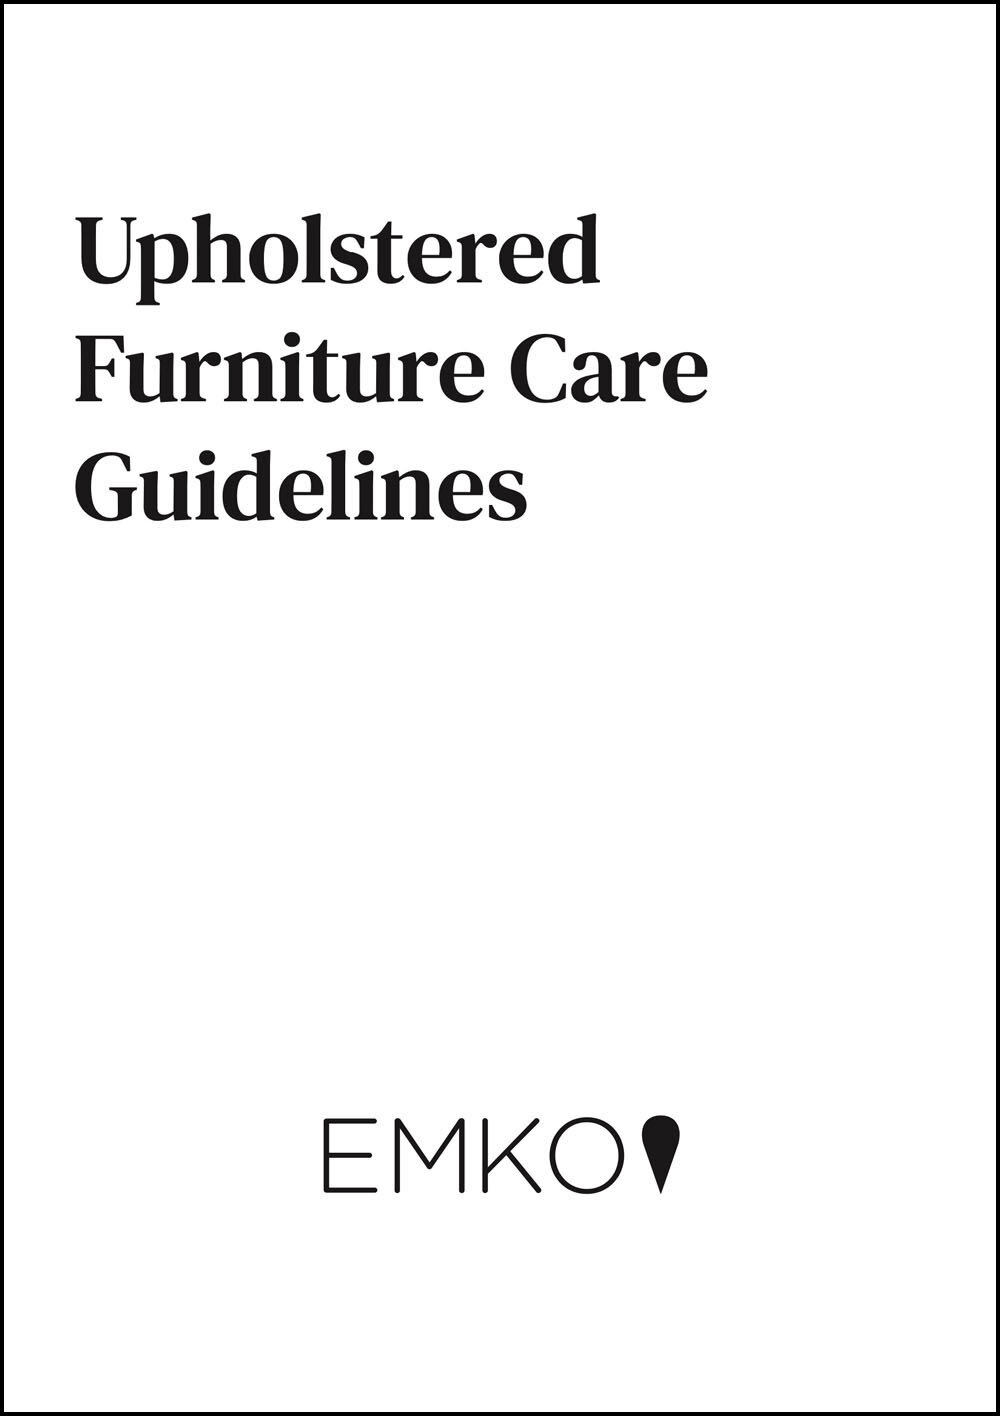 Upholstered Furniture Care Guidelines.jpg